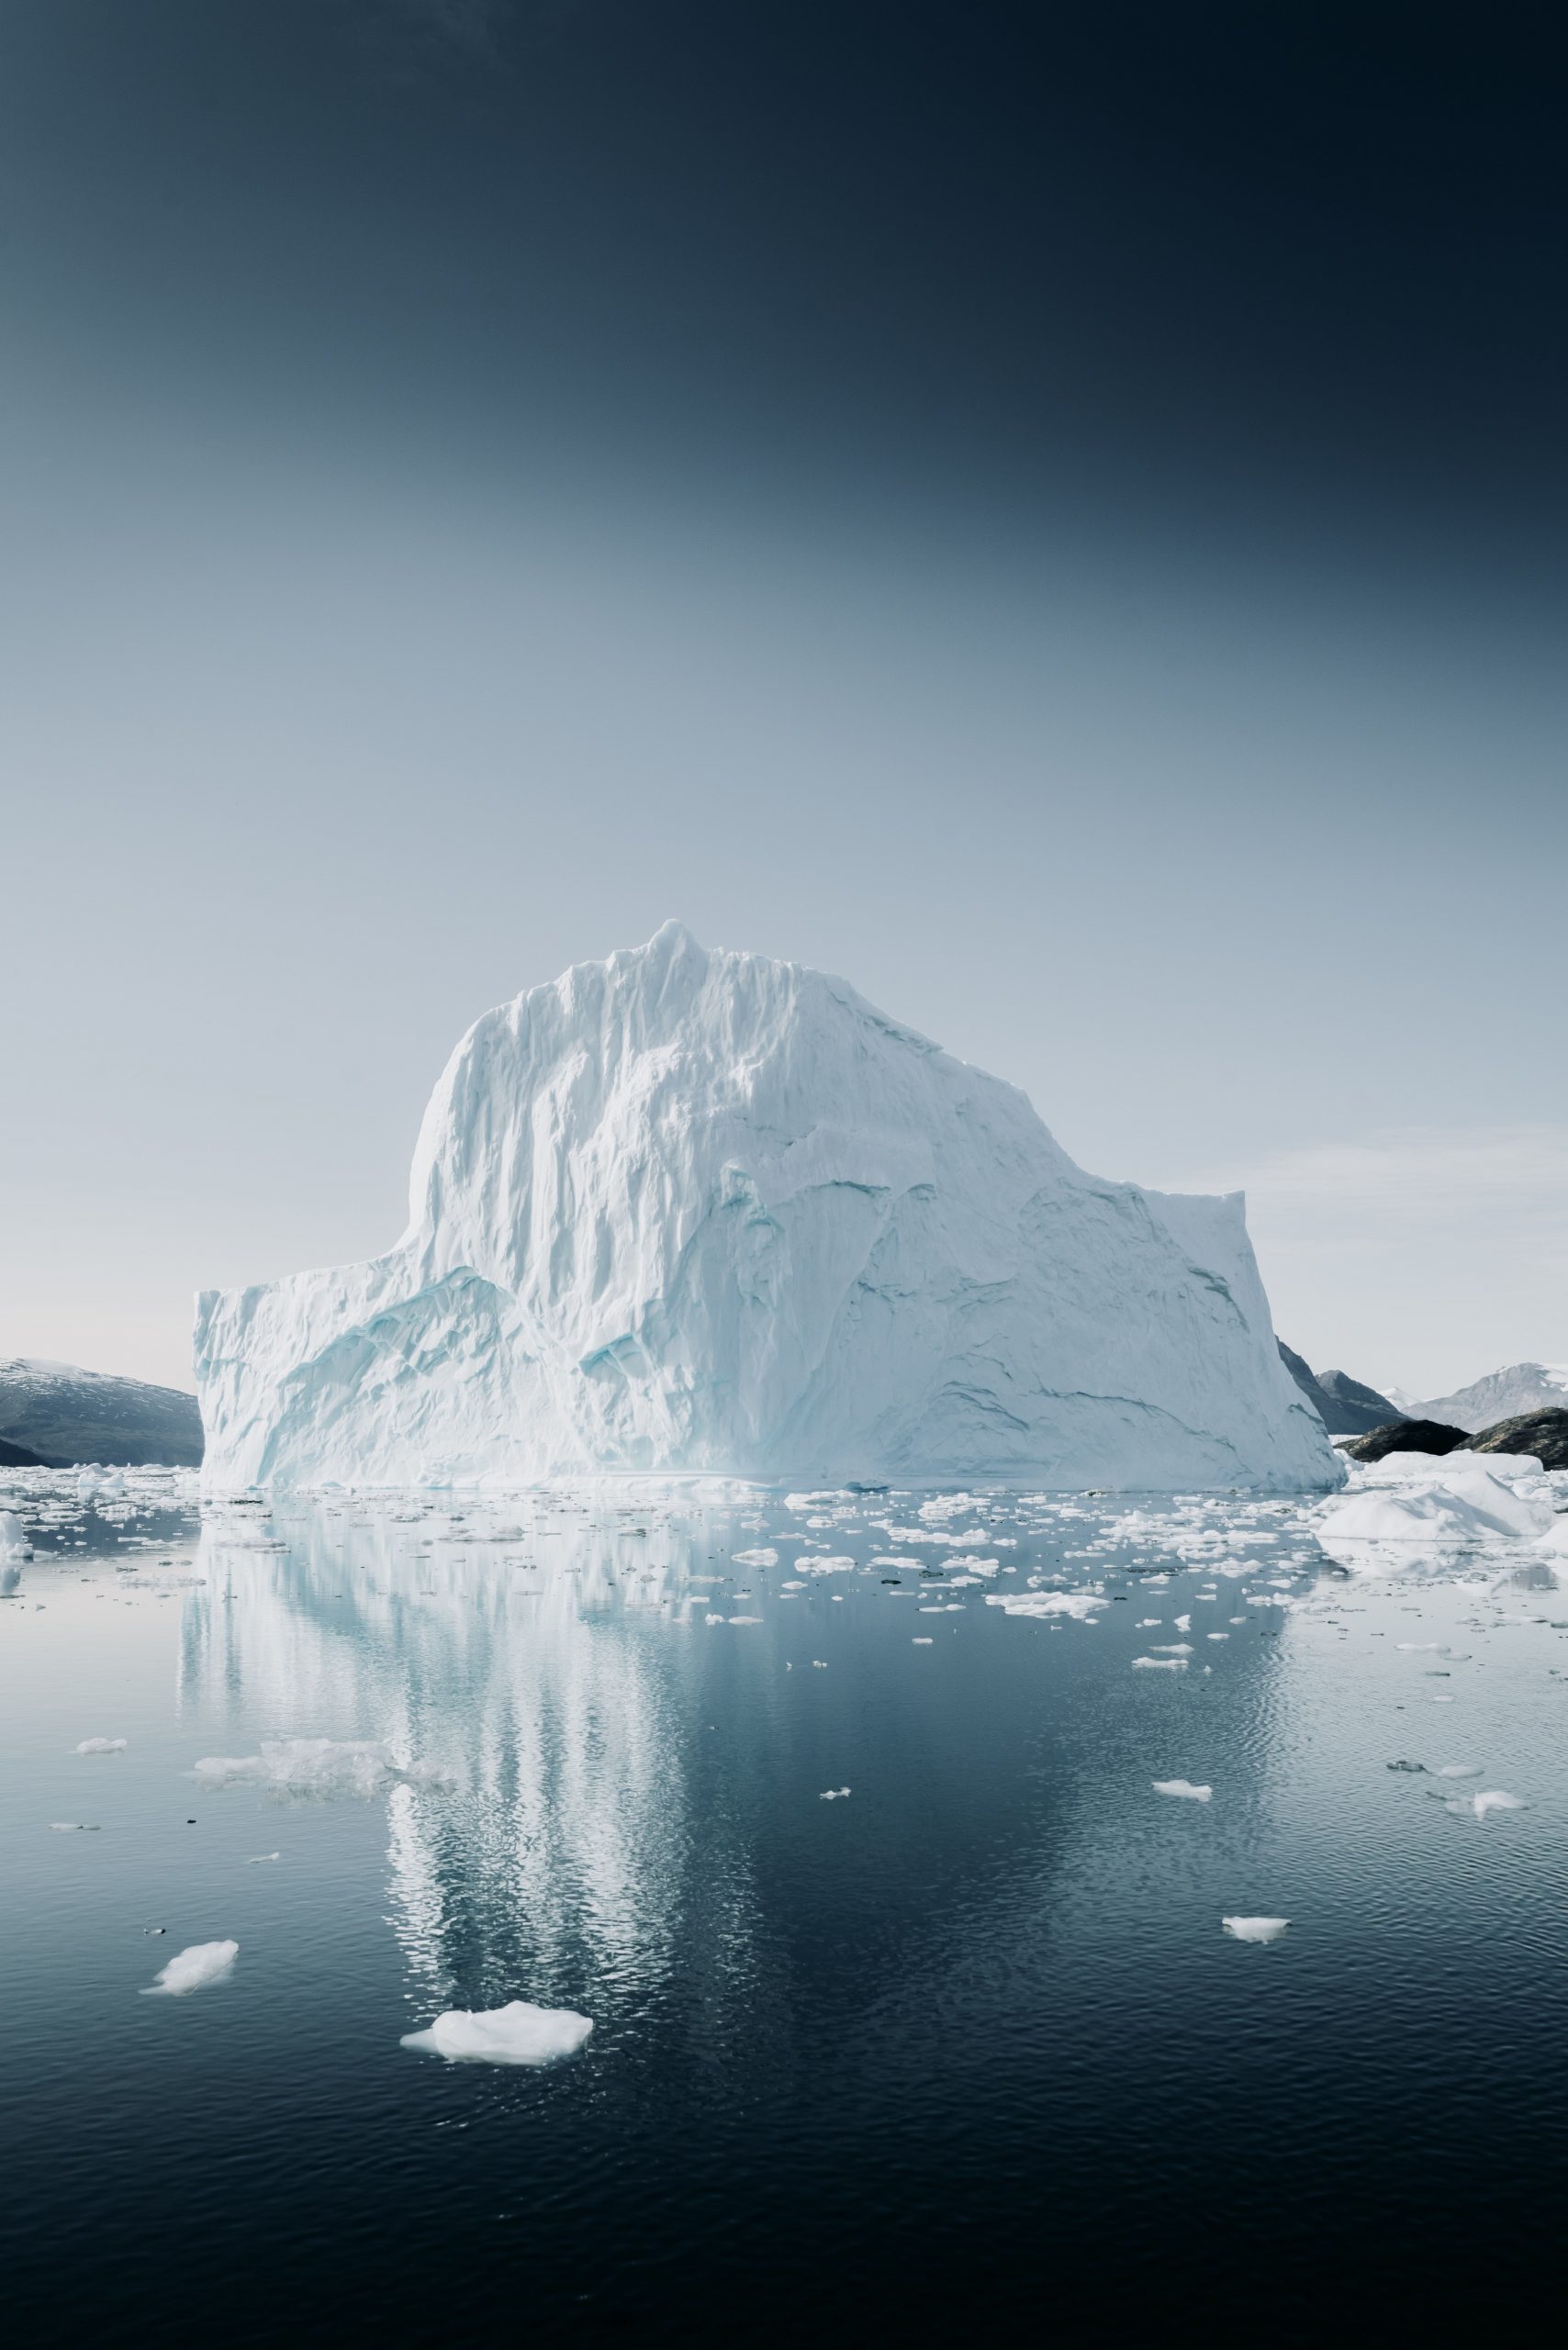 Antarcticas doomsday glacier melting at concerning rate say scientists